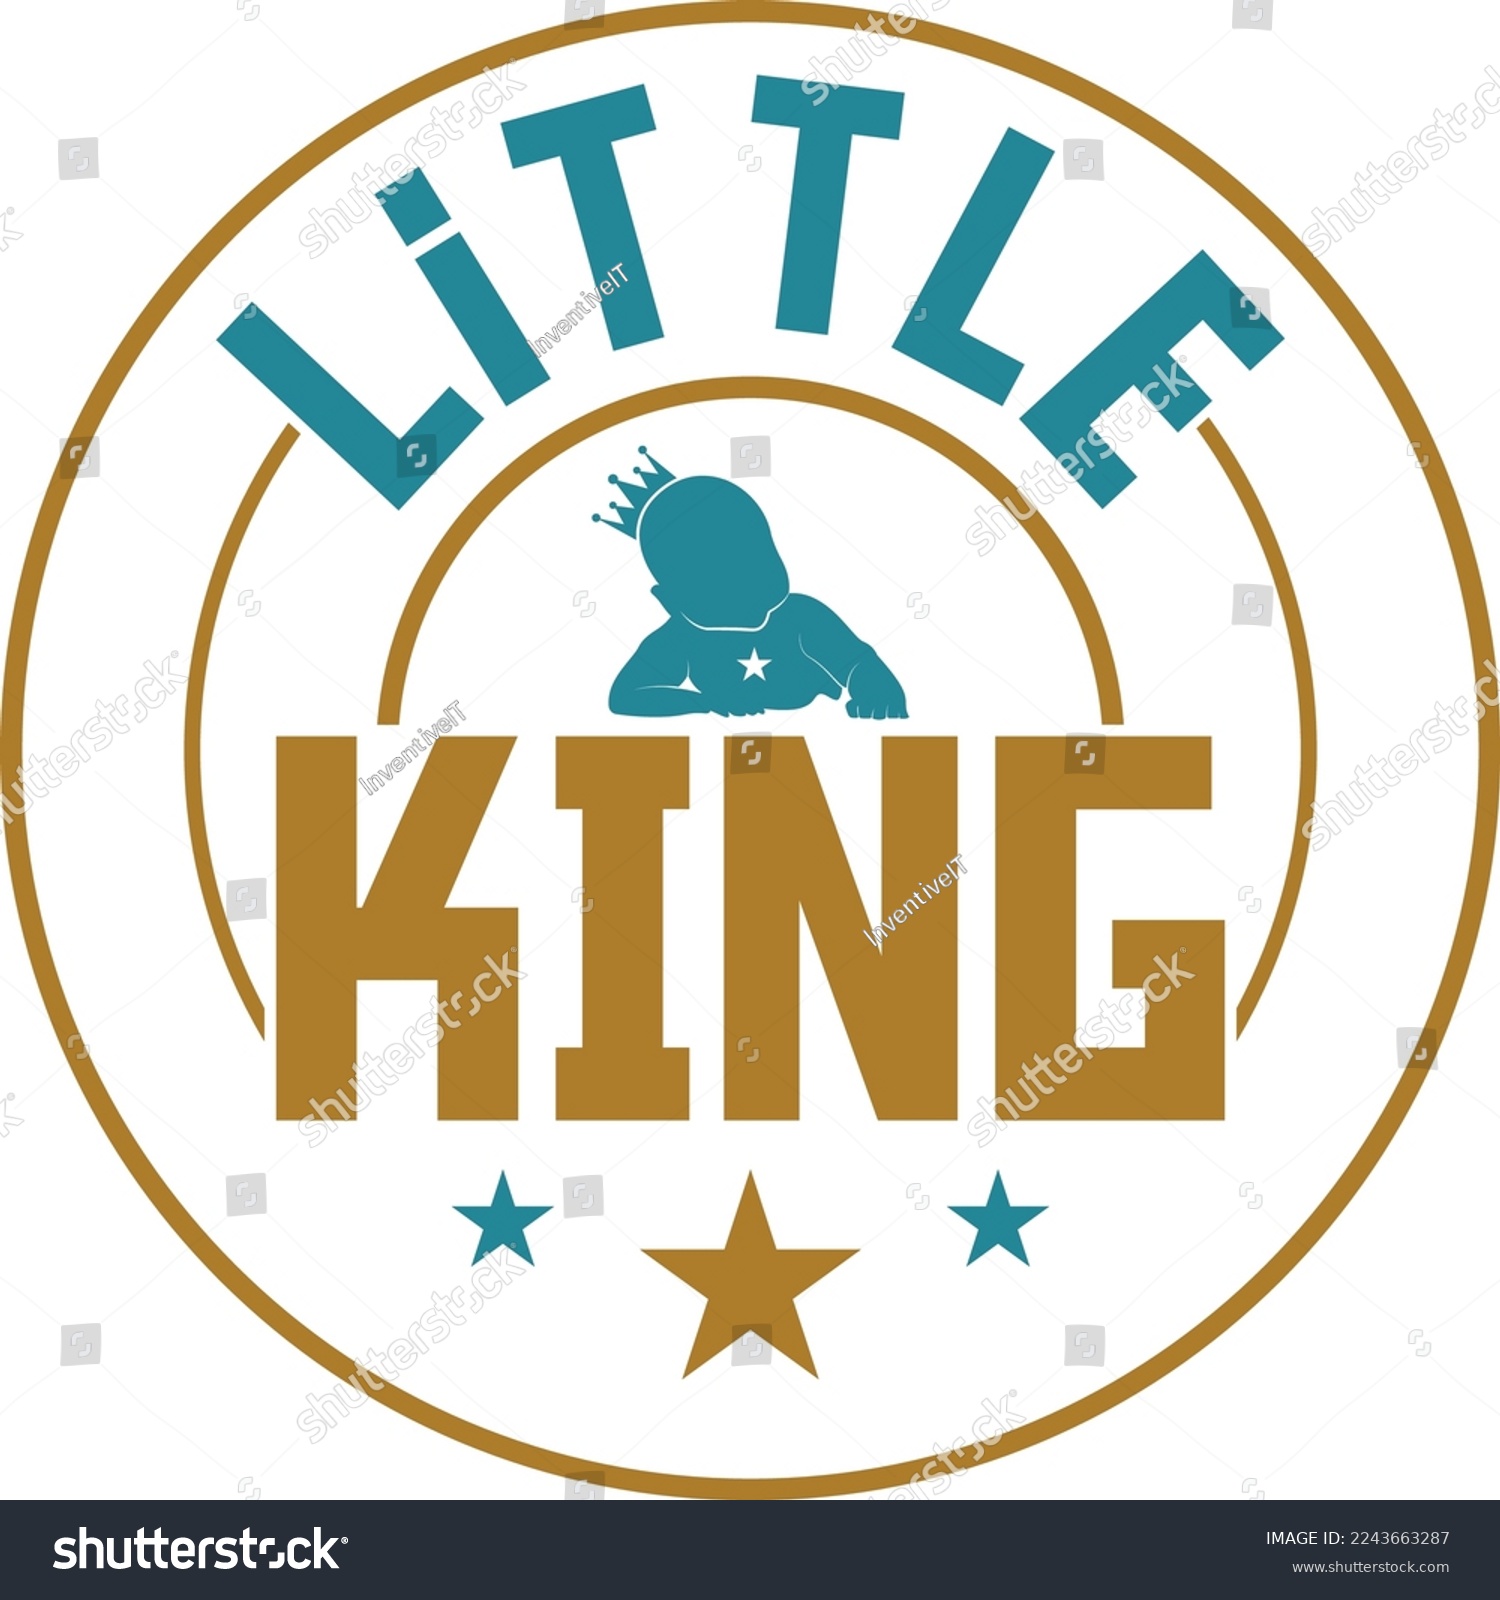 Little King Svg Printable Vector Illustration Royalty Free Stock Vector 2243663287 0654